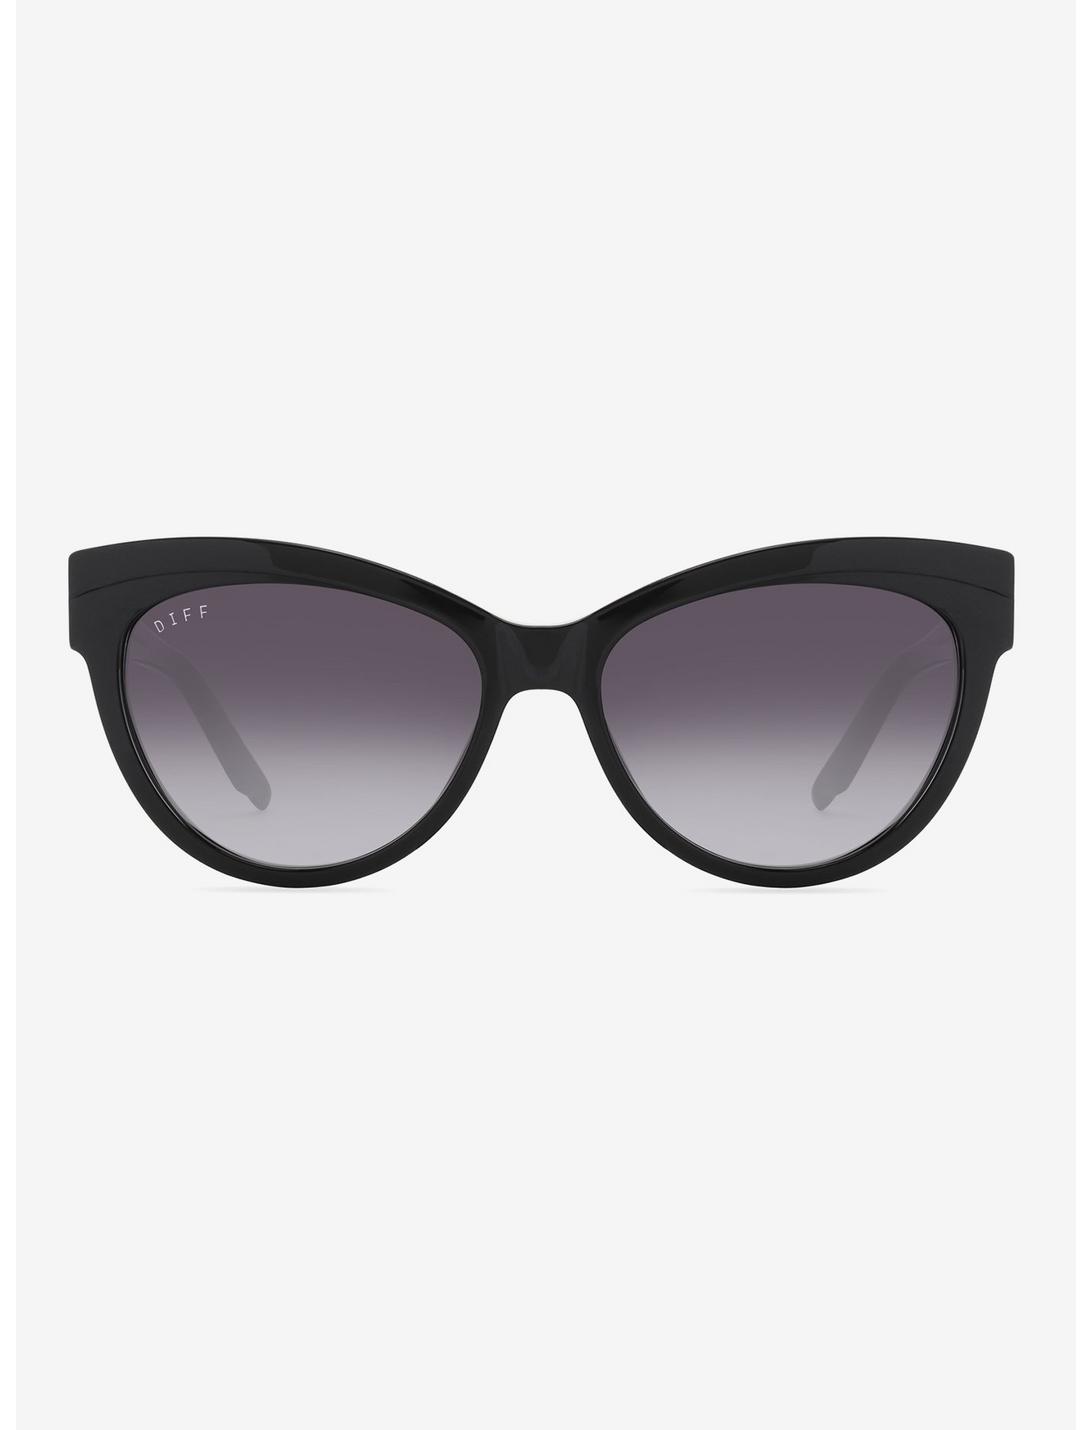 Marilyn Monroe X DIFF Cat Eye Sunglasses, , hi-res